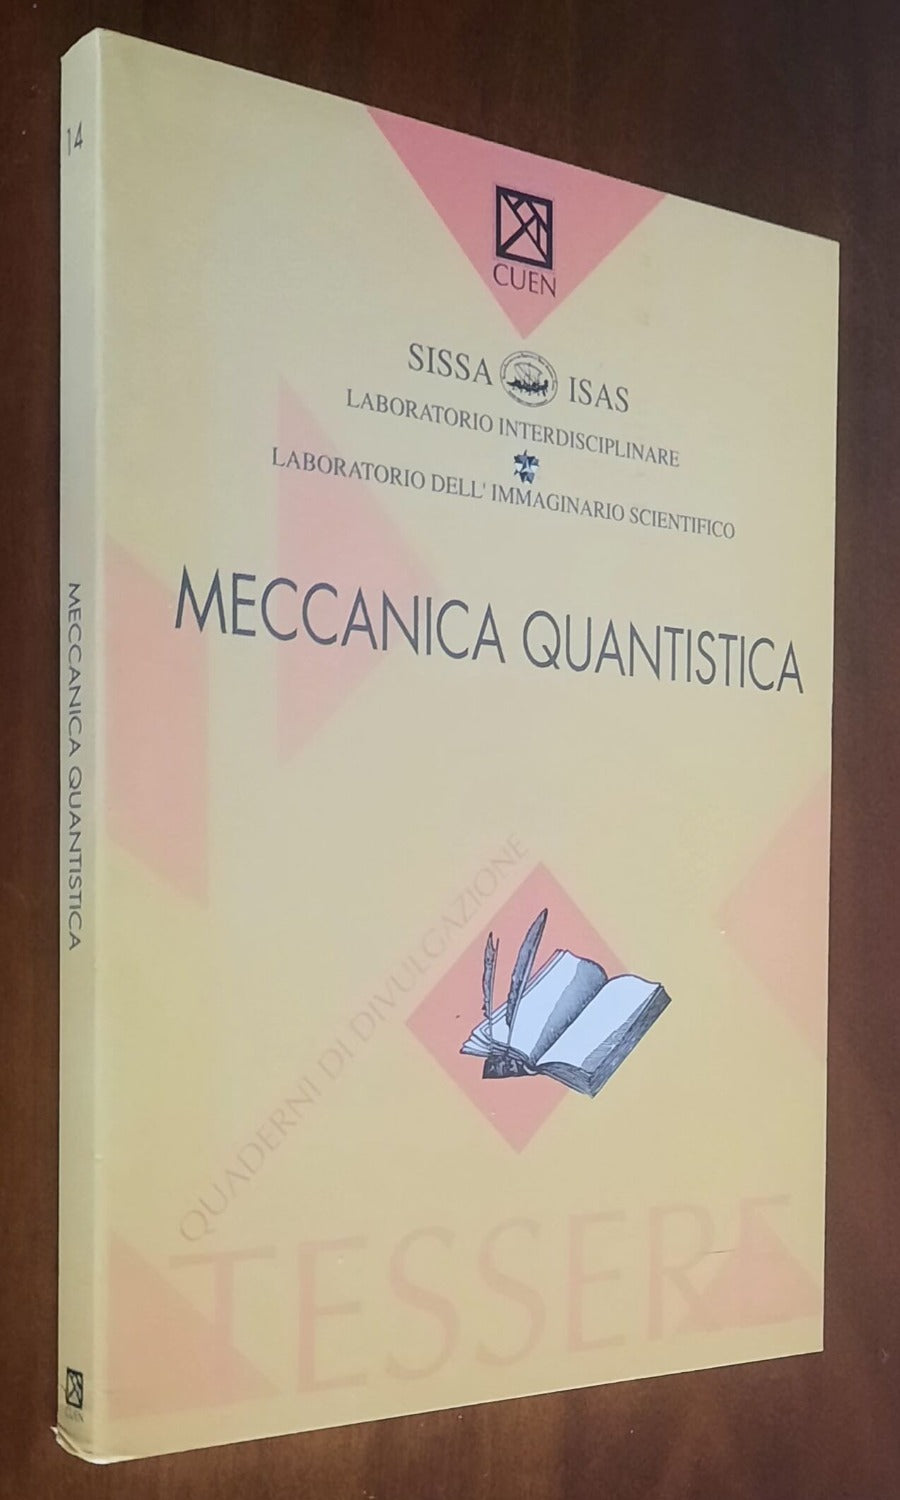 Meccanica quantistica - Tessere quaderni di divulgazione